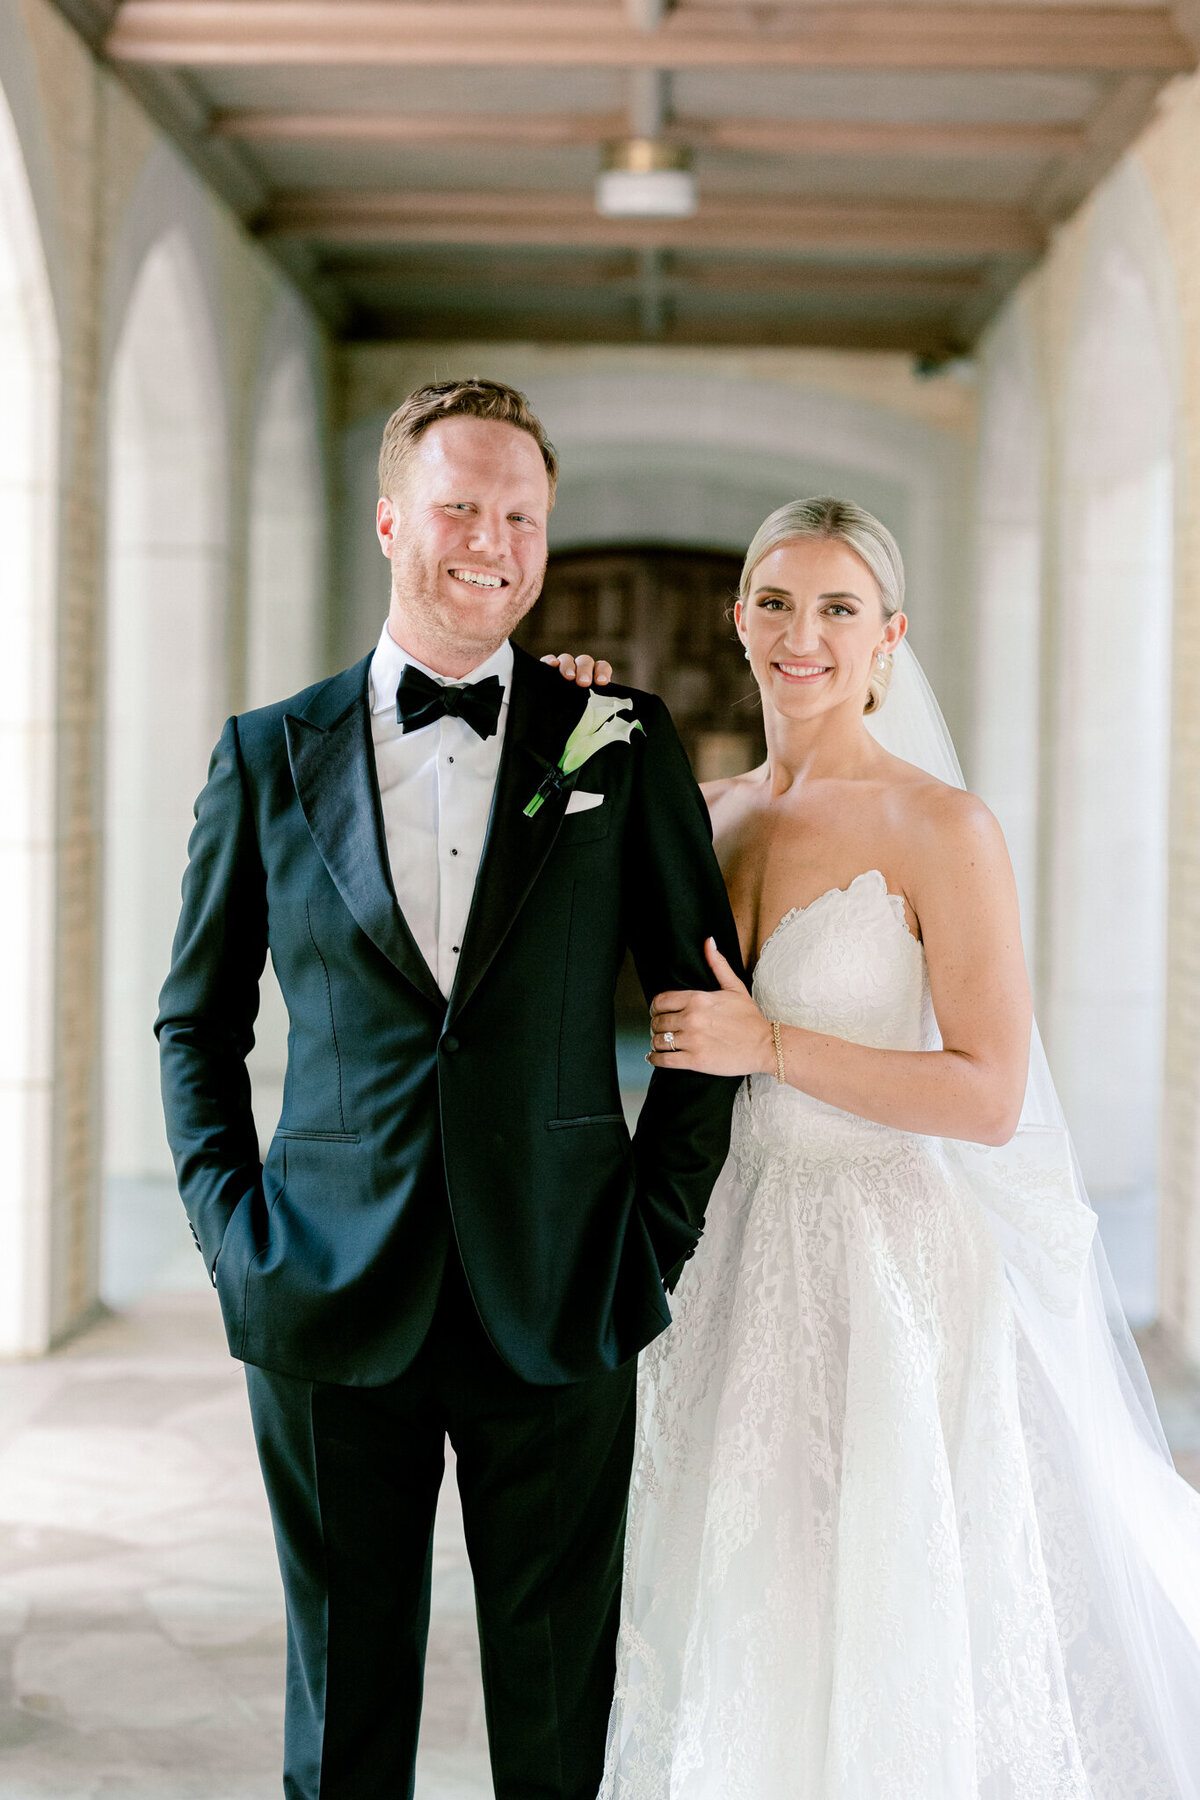 Katelyn & Kyle's Wedding at the Adolphus Hotel | Dallas Wedding Photographer | Sami Kathryn Photography-219